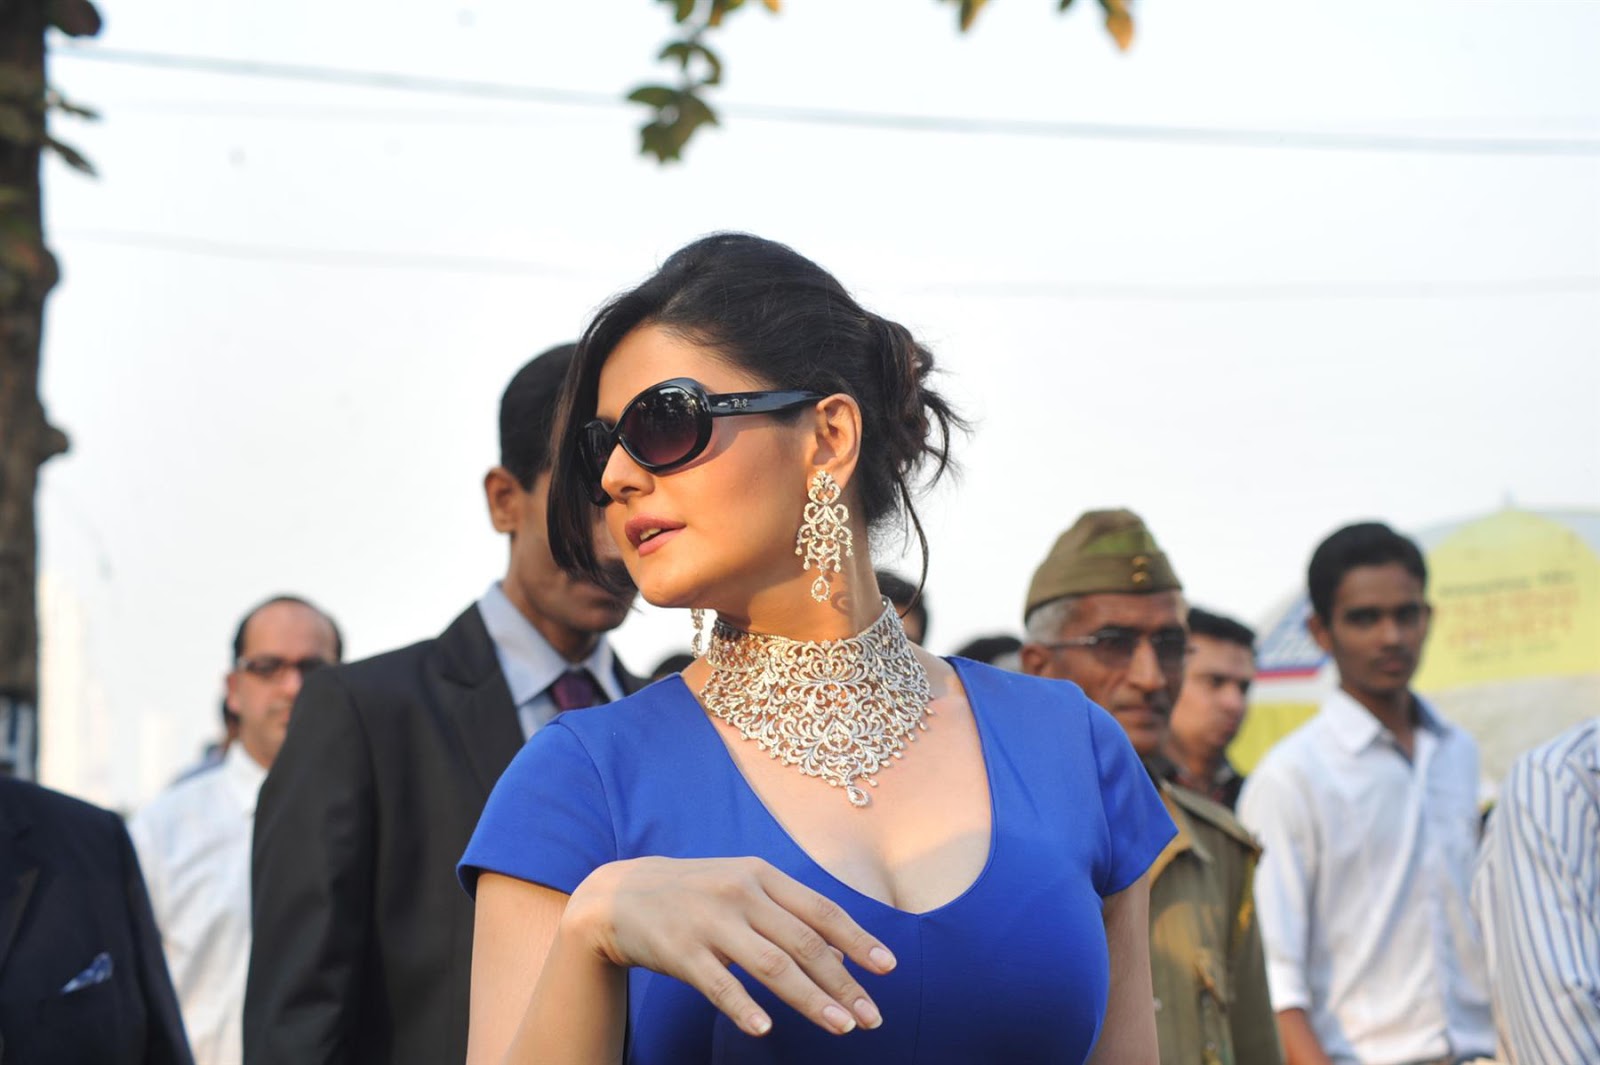 Zarine Khan Sexy In Blue Skirt At The Gitanjali Race Event